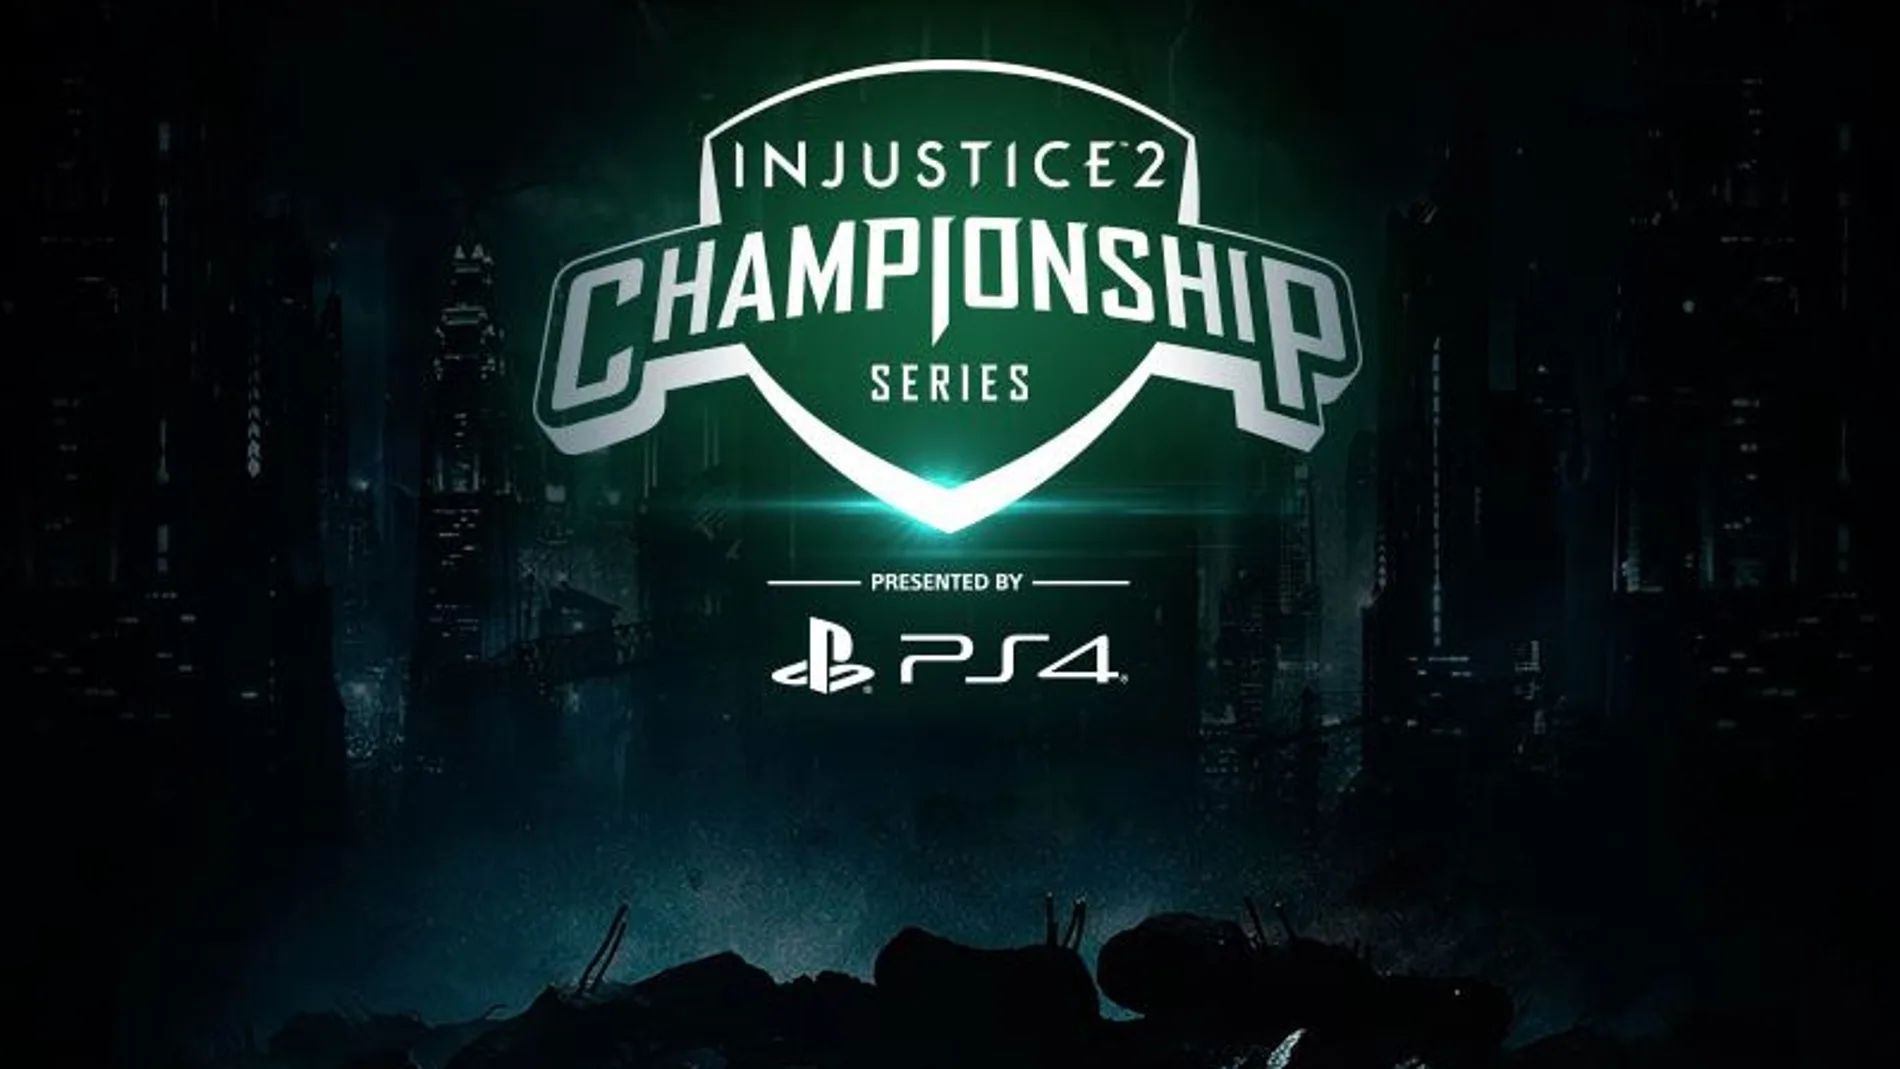 Injustice 2 Championship Series